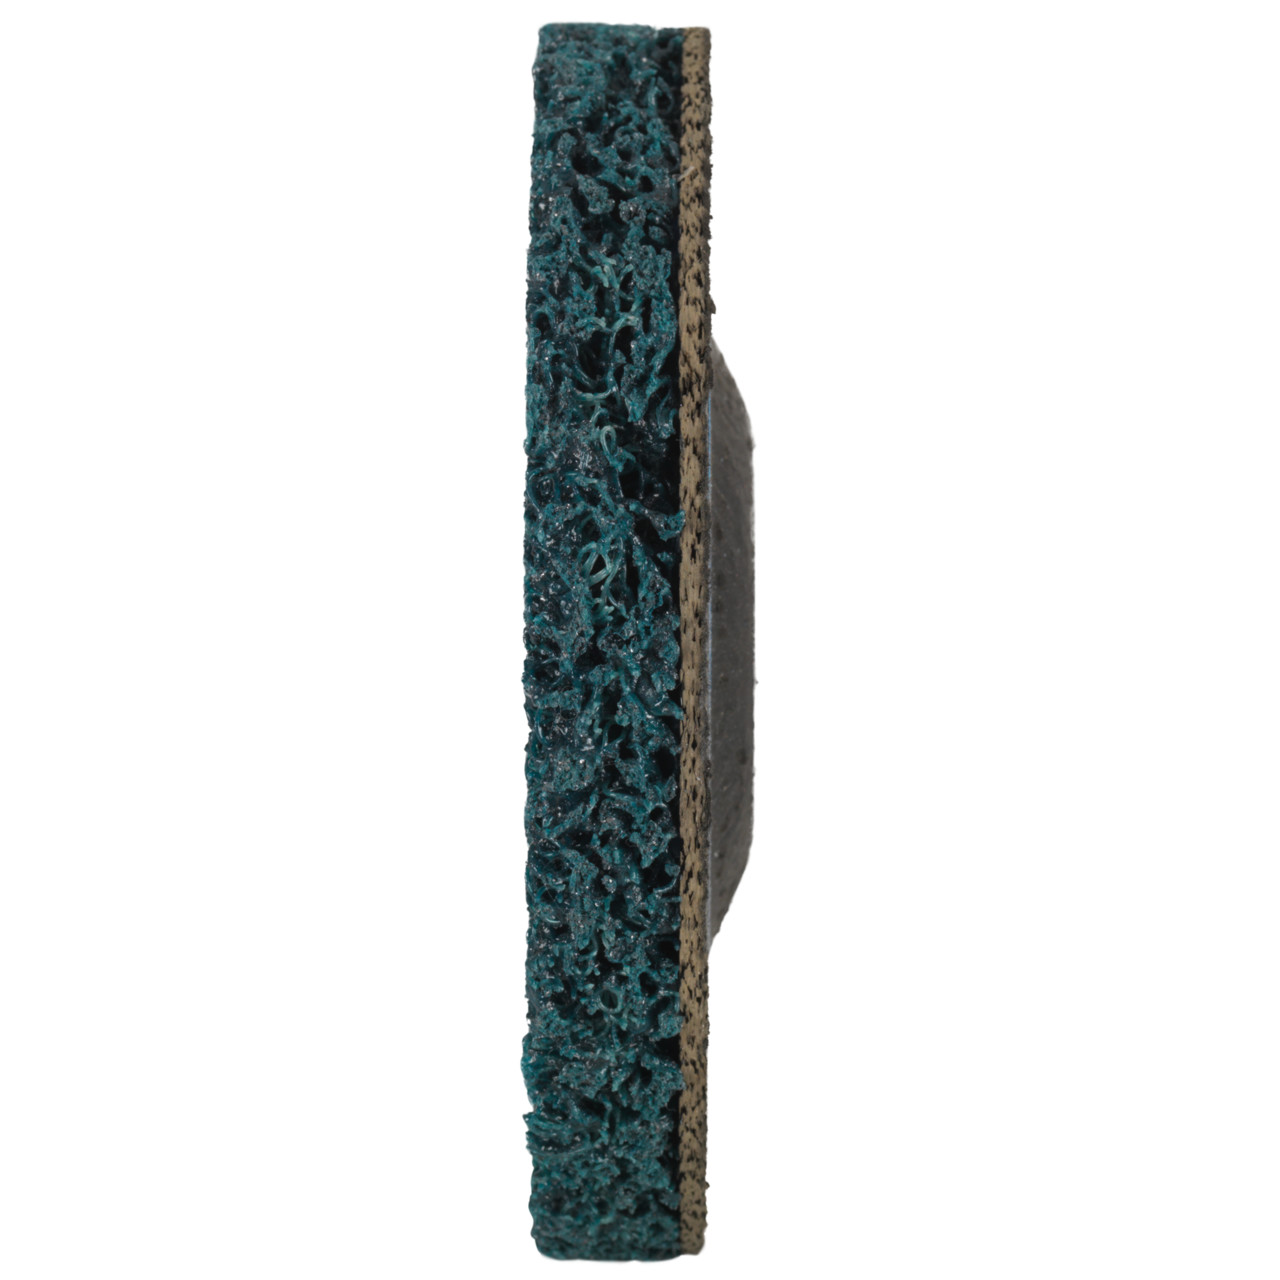 Tyrolit Grove reinigingsschijf DxH 125x22,2 Universeel toepasbaar, C GROB, vorm: 28- (grove reinigingsschijf), Art. 898017